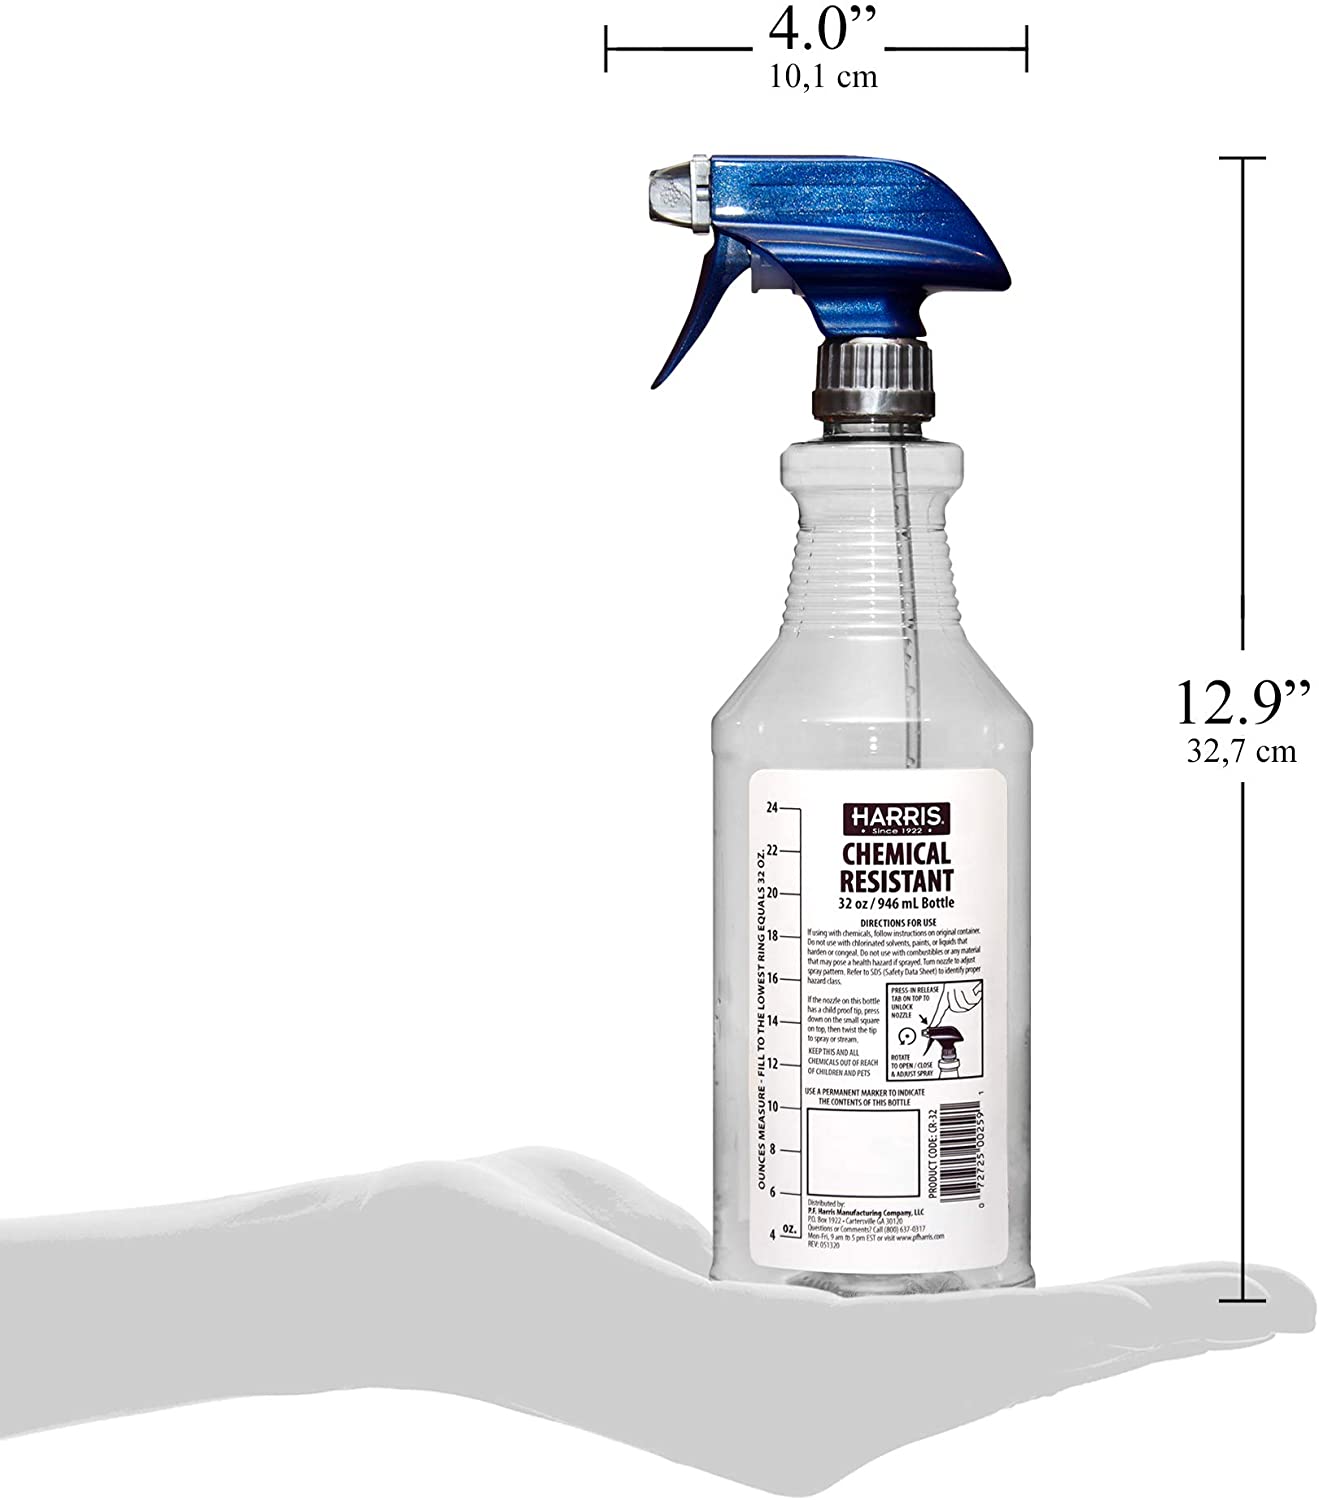 Harris Chemically Resistant Spray Bottles, 32 fl. oz. (3-Pack) - PF Harris